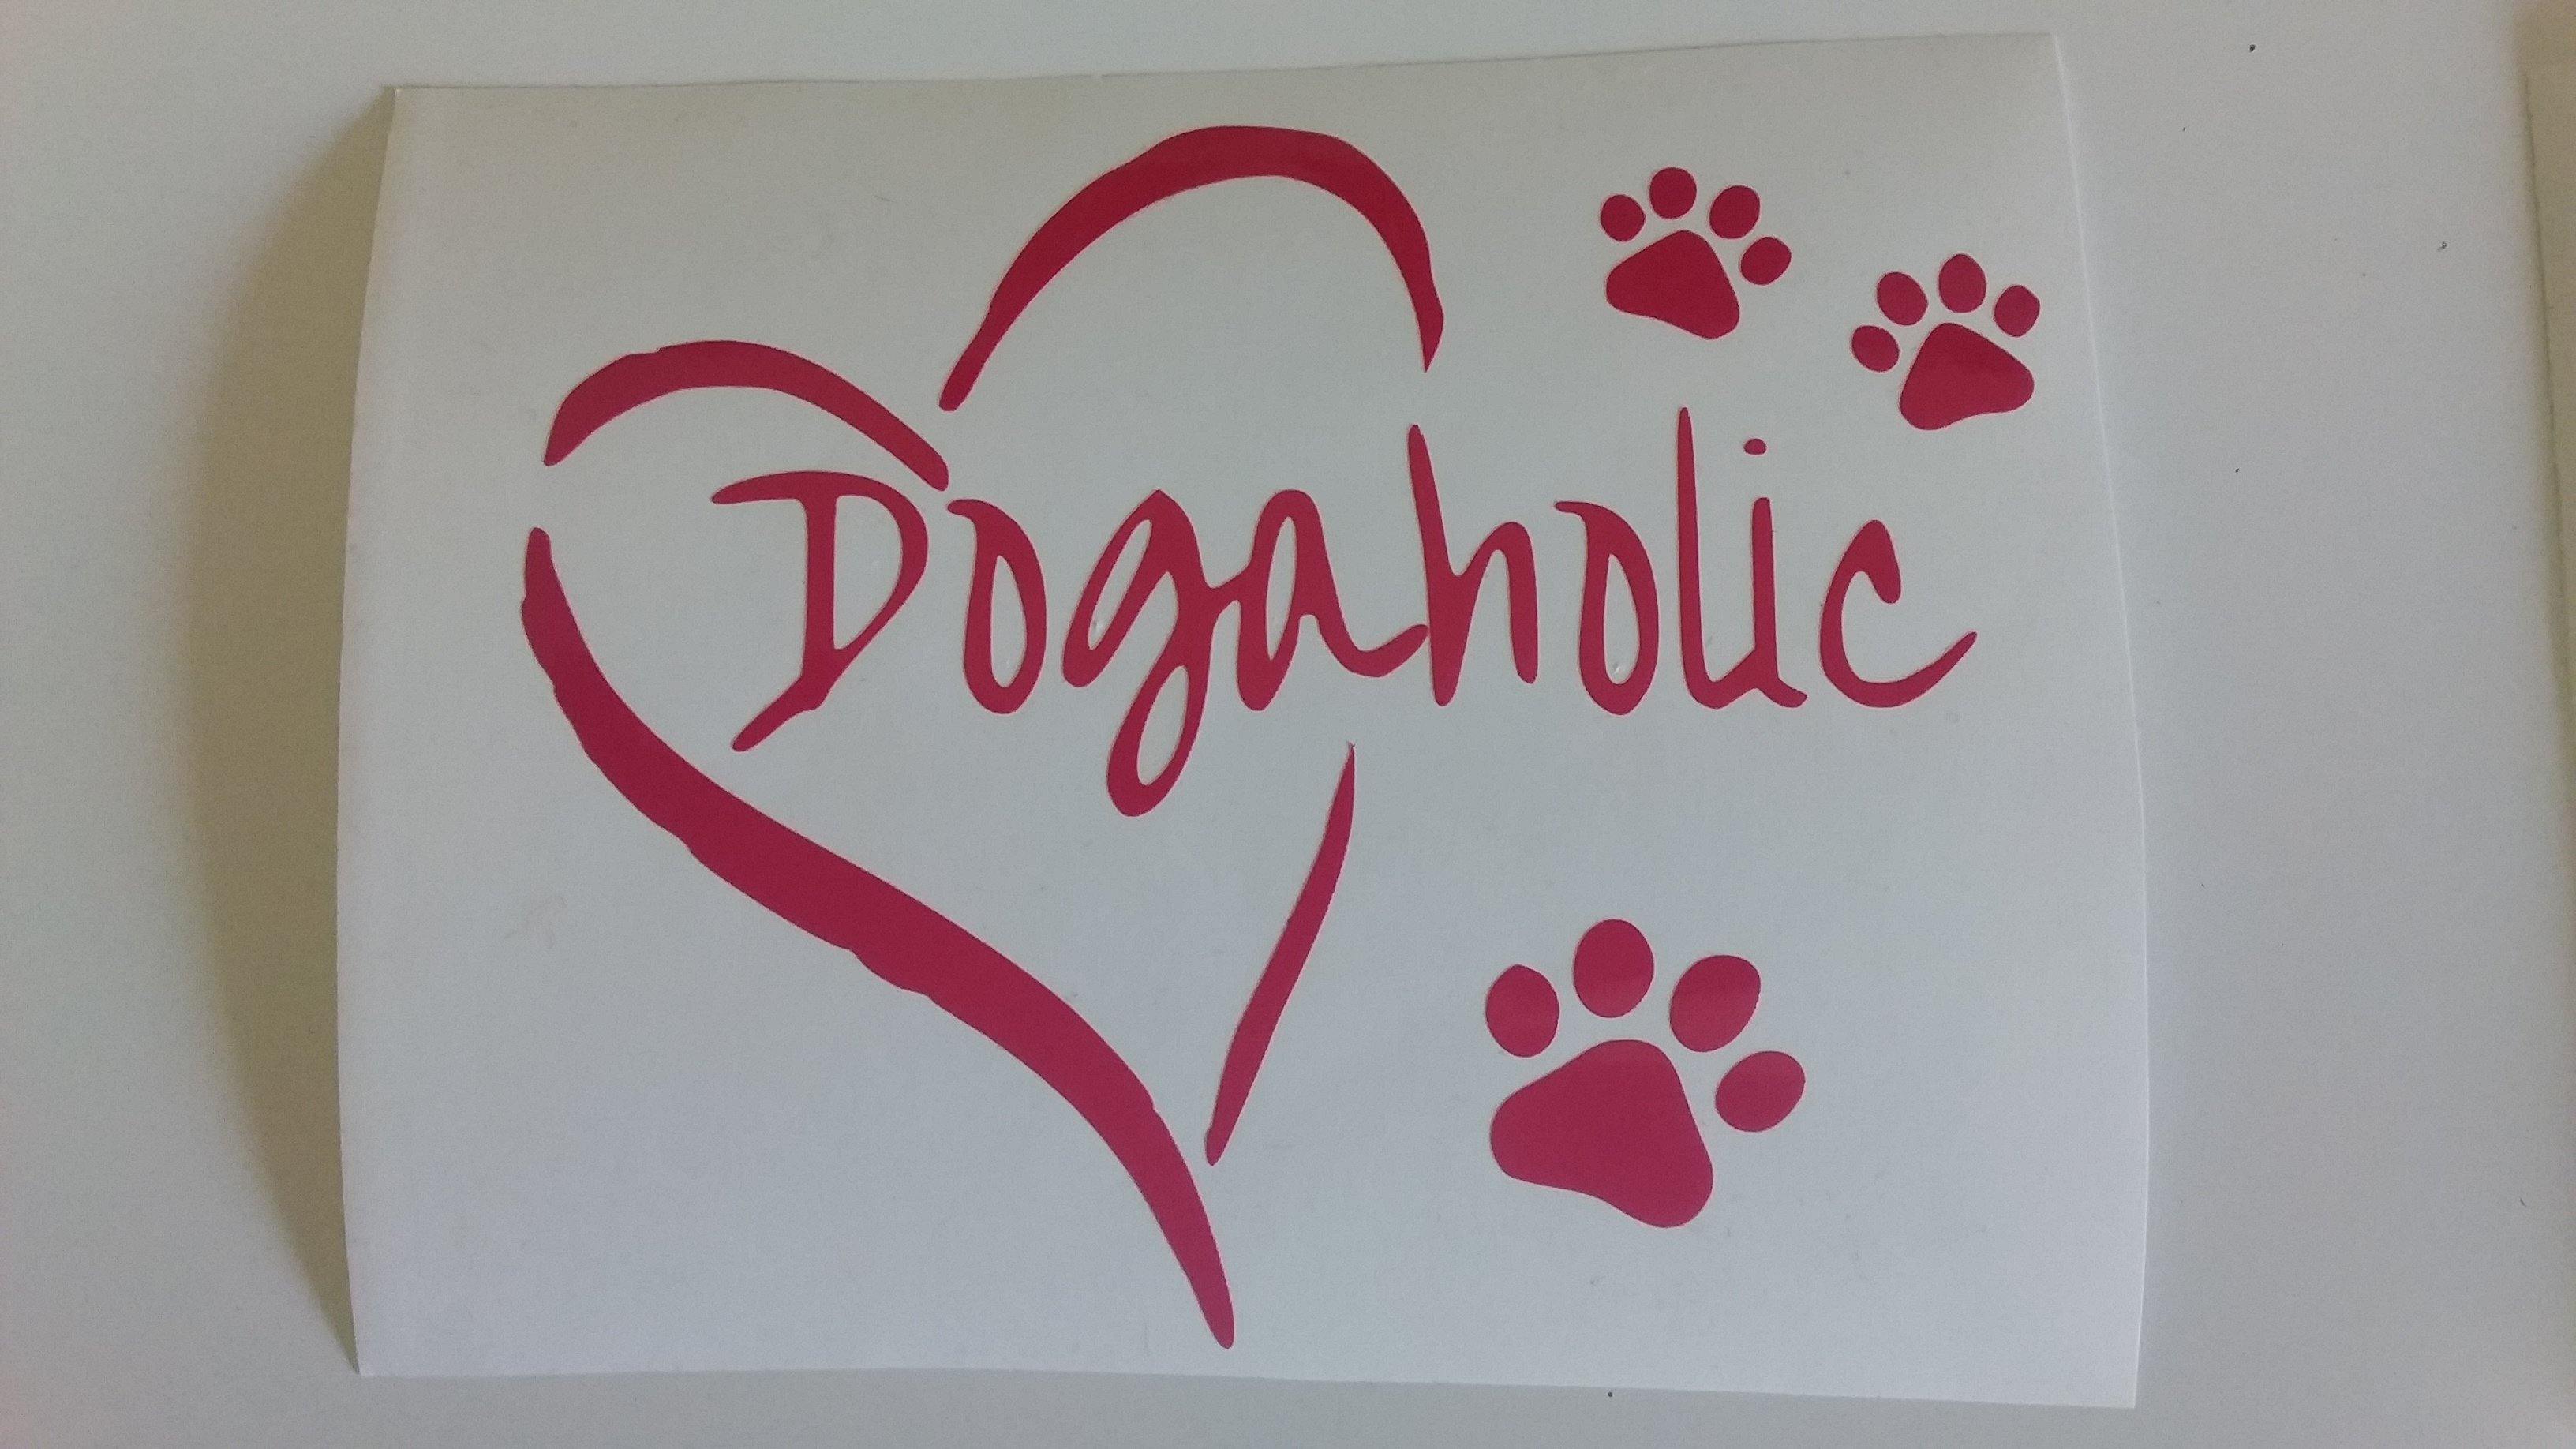 Dogaholic Heart and Paw Dog Car Decal / Sticker - My Crafty Dog